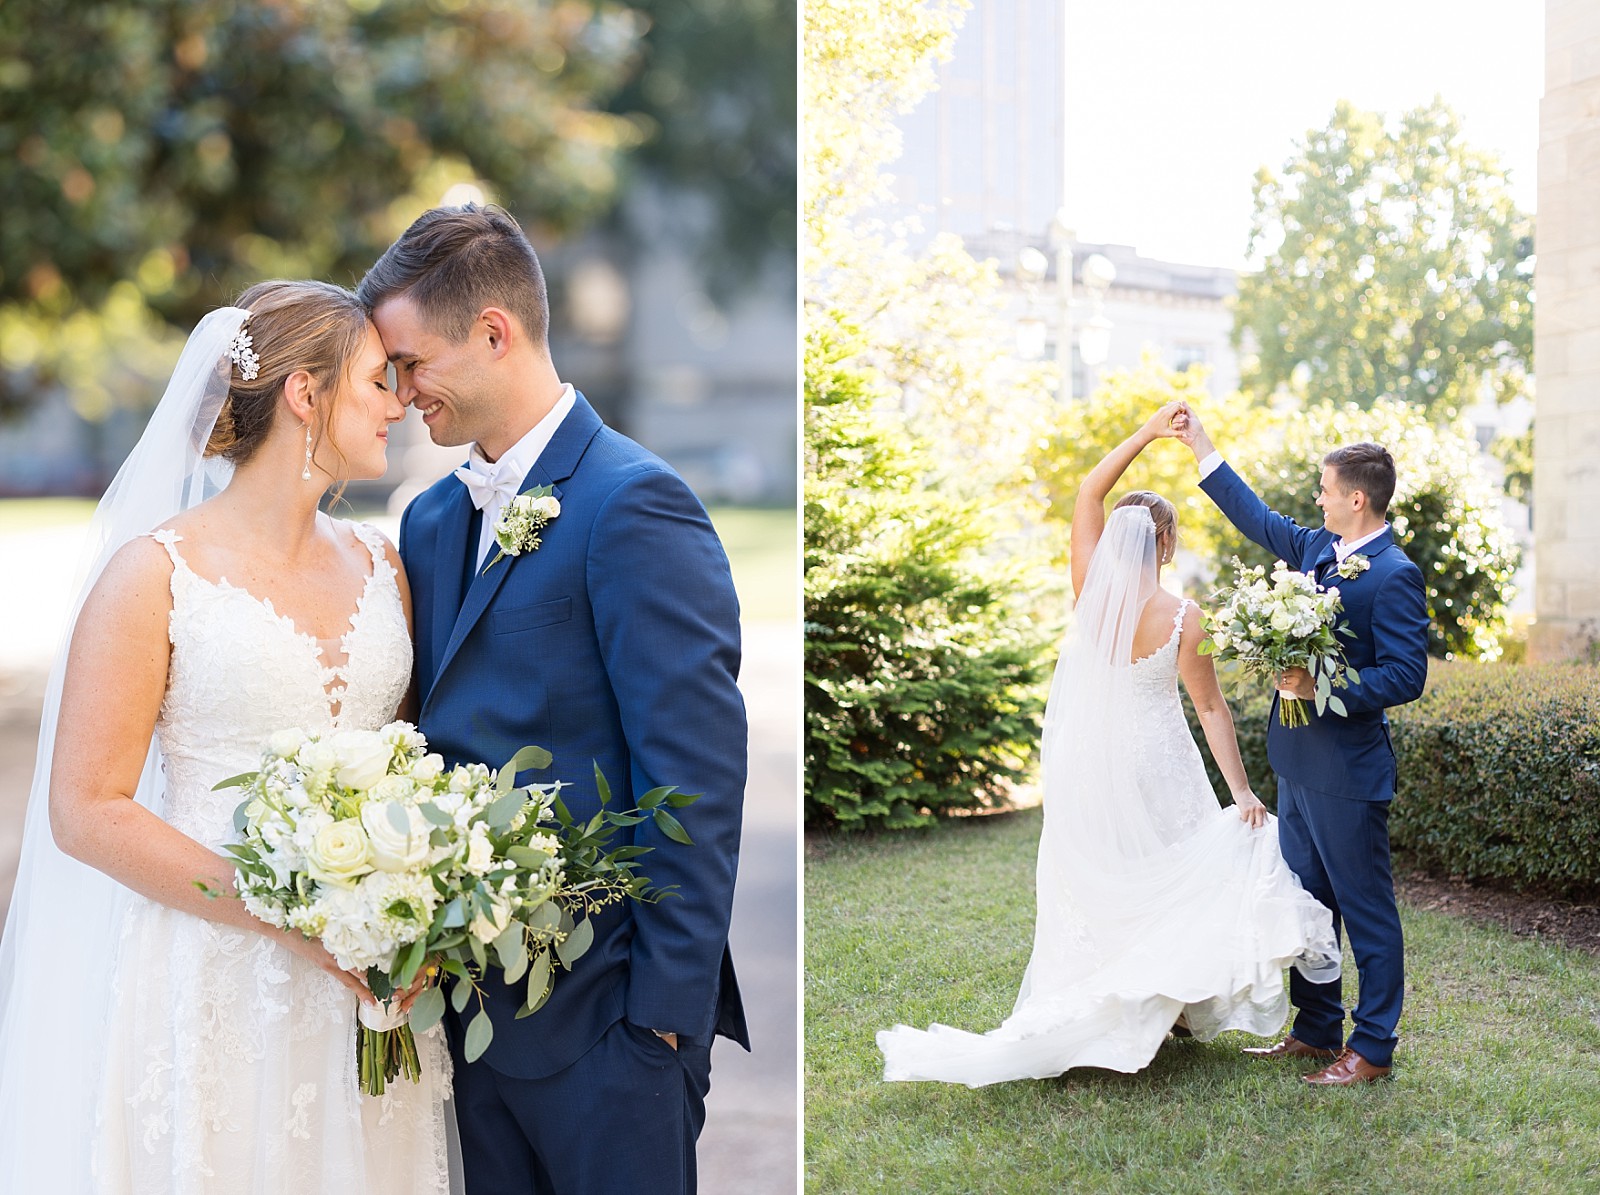 Groom twirling the bride | Raleigh Wedding Photographer Sarah Hinckley